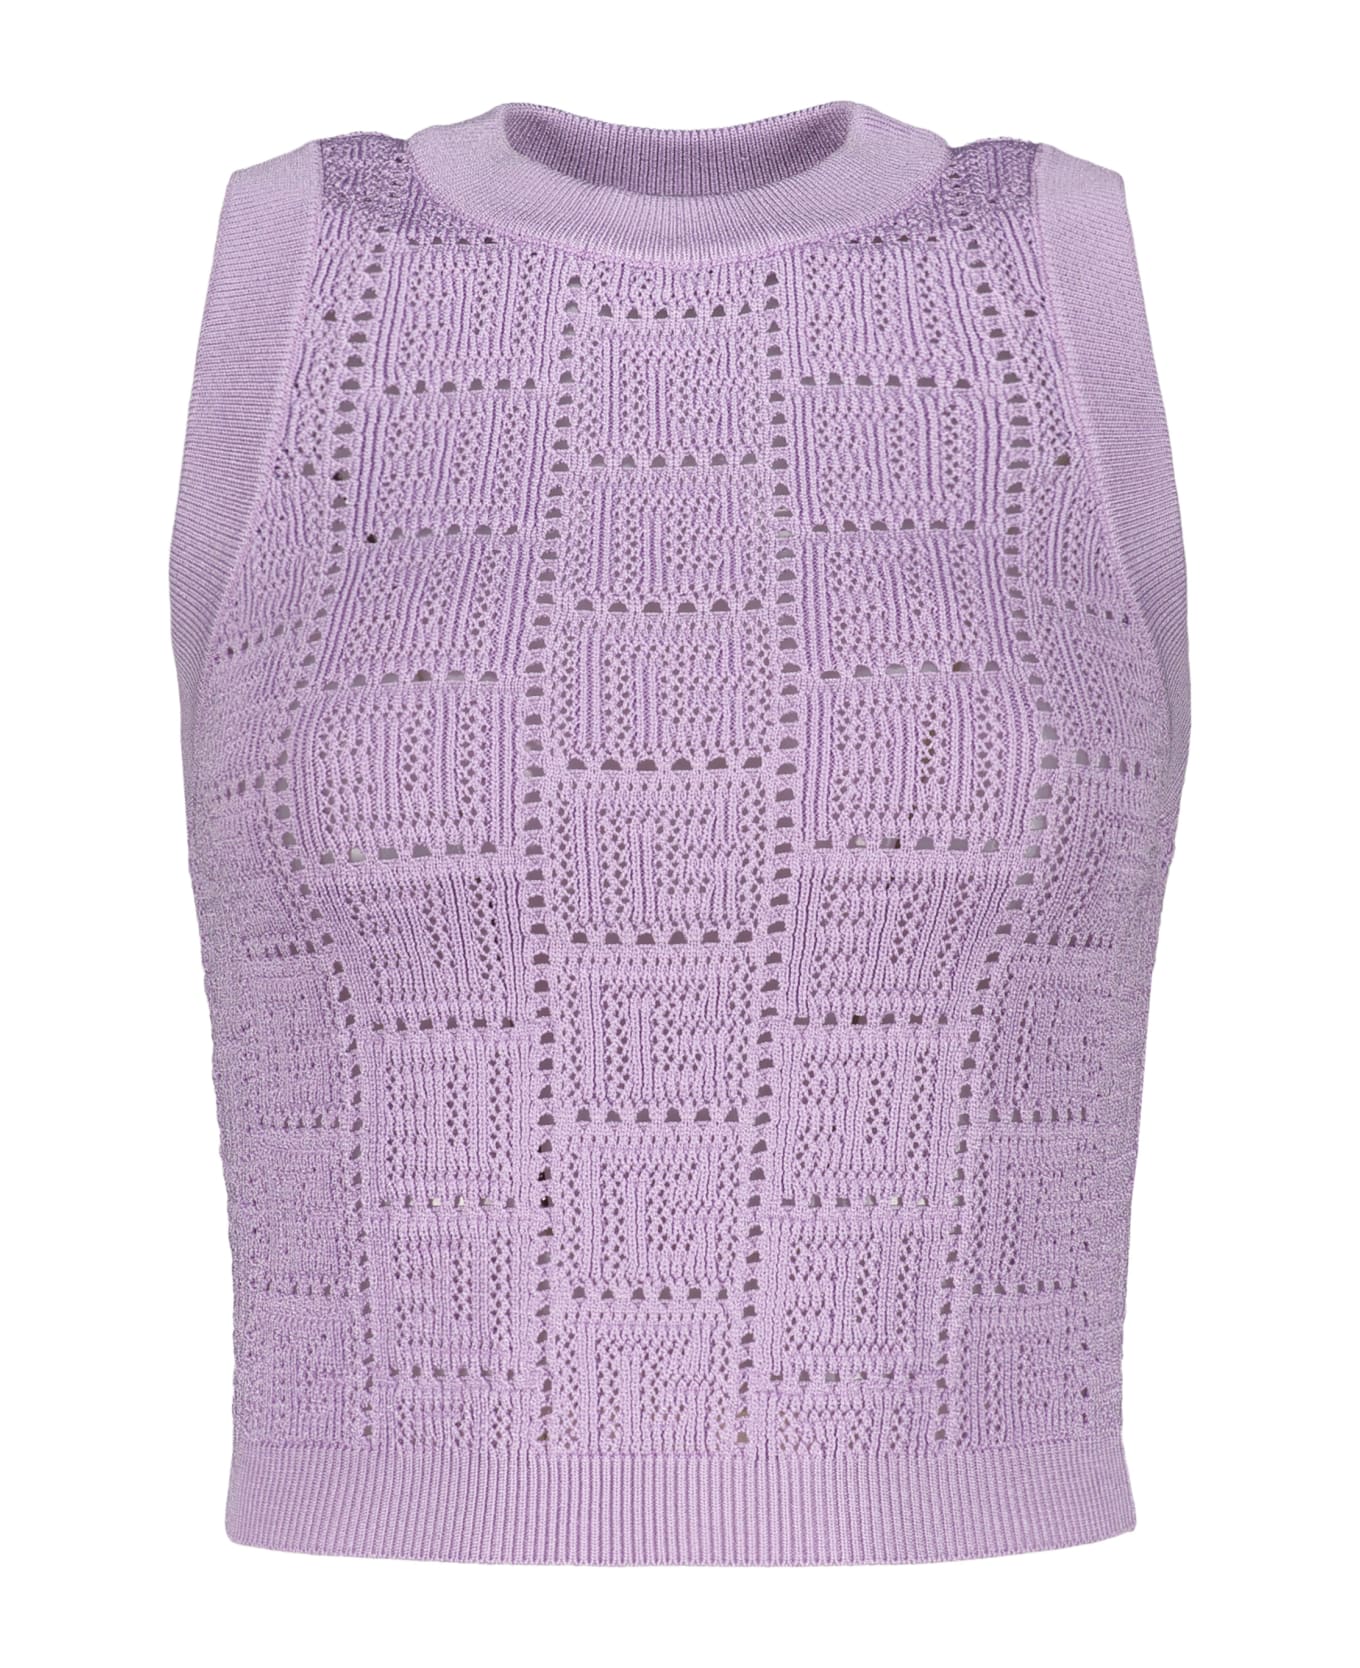 Balmain Knitted Viscosa-blend Top - Lilac